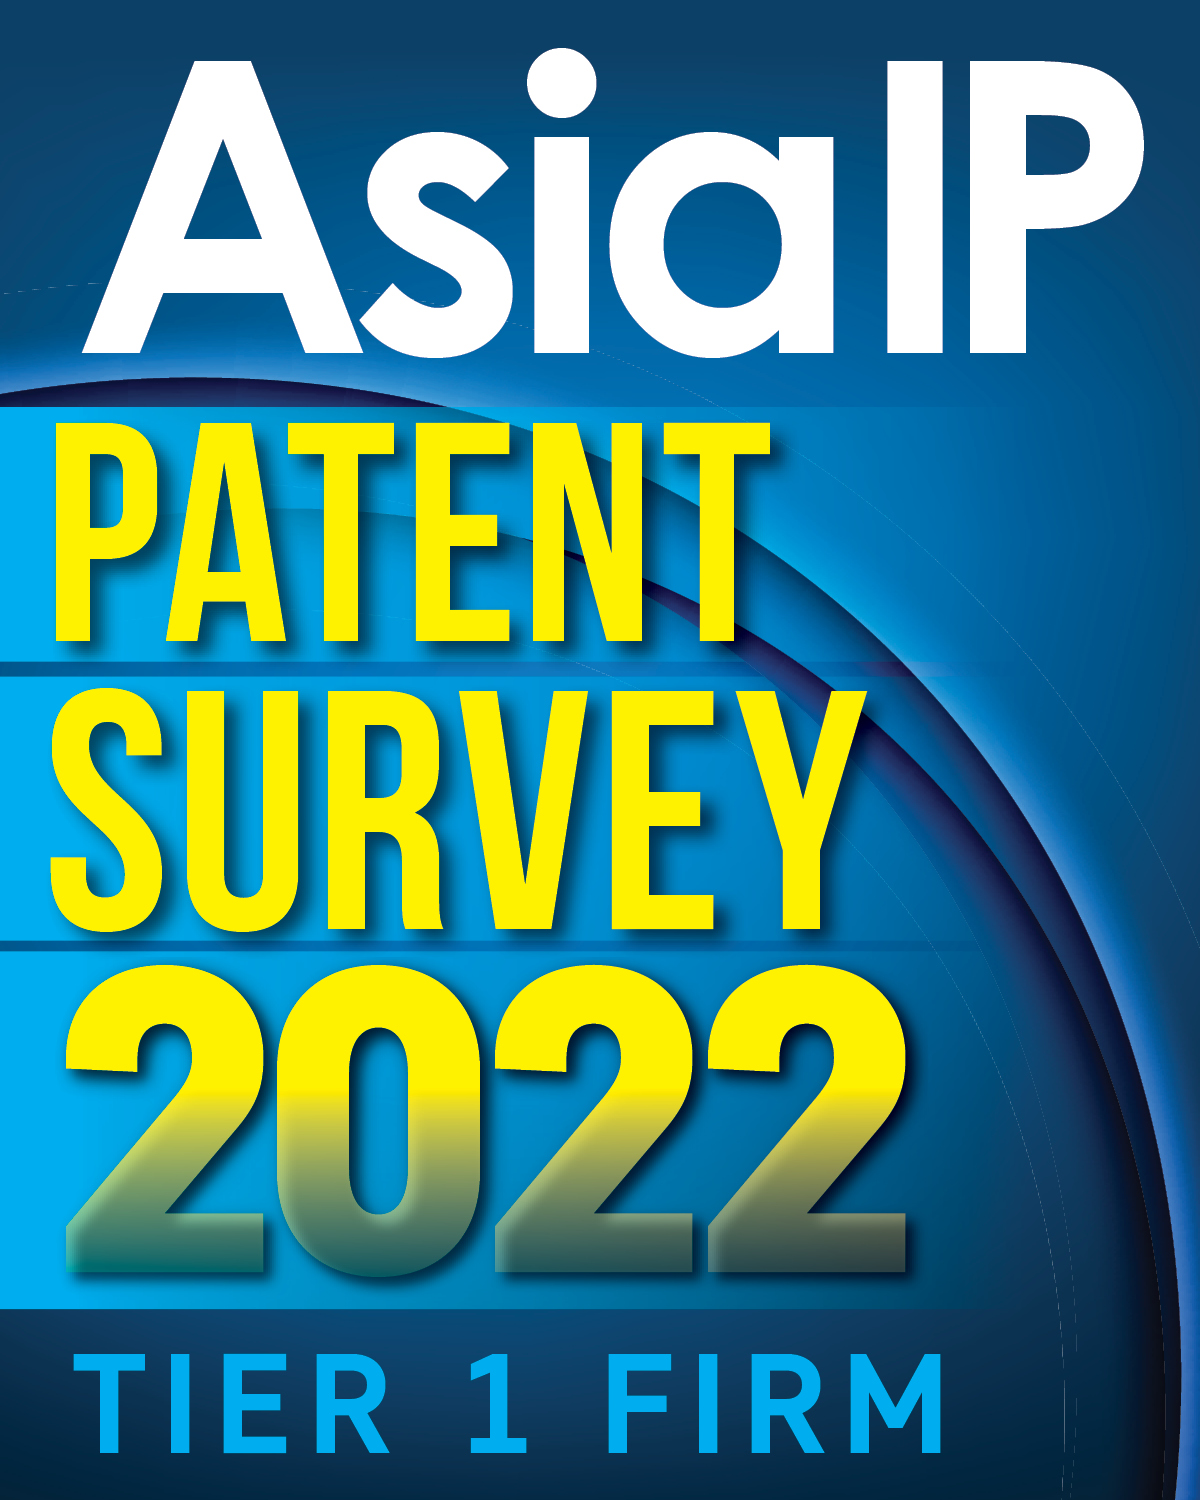 Asia IP Patent Survey 2022 logo - Tier 1 Firm.jpg